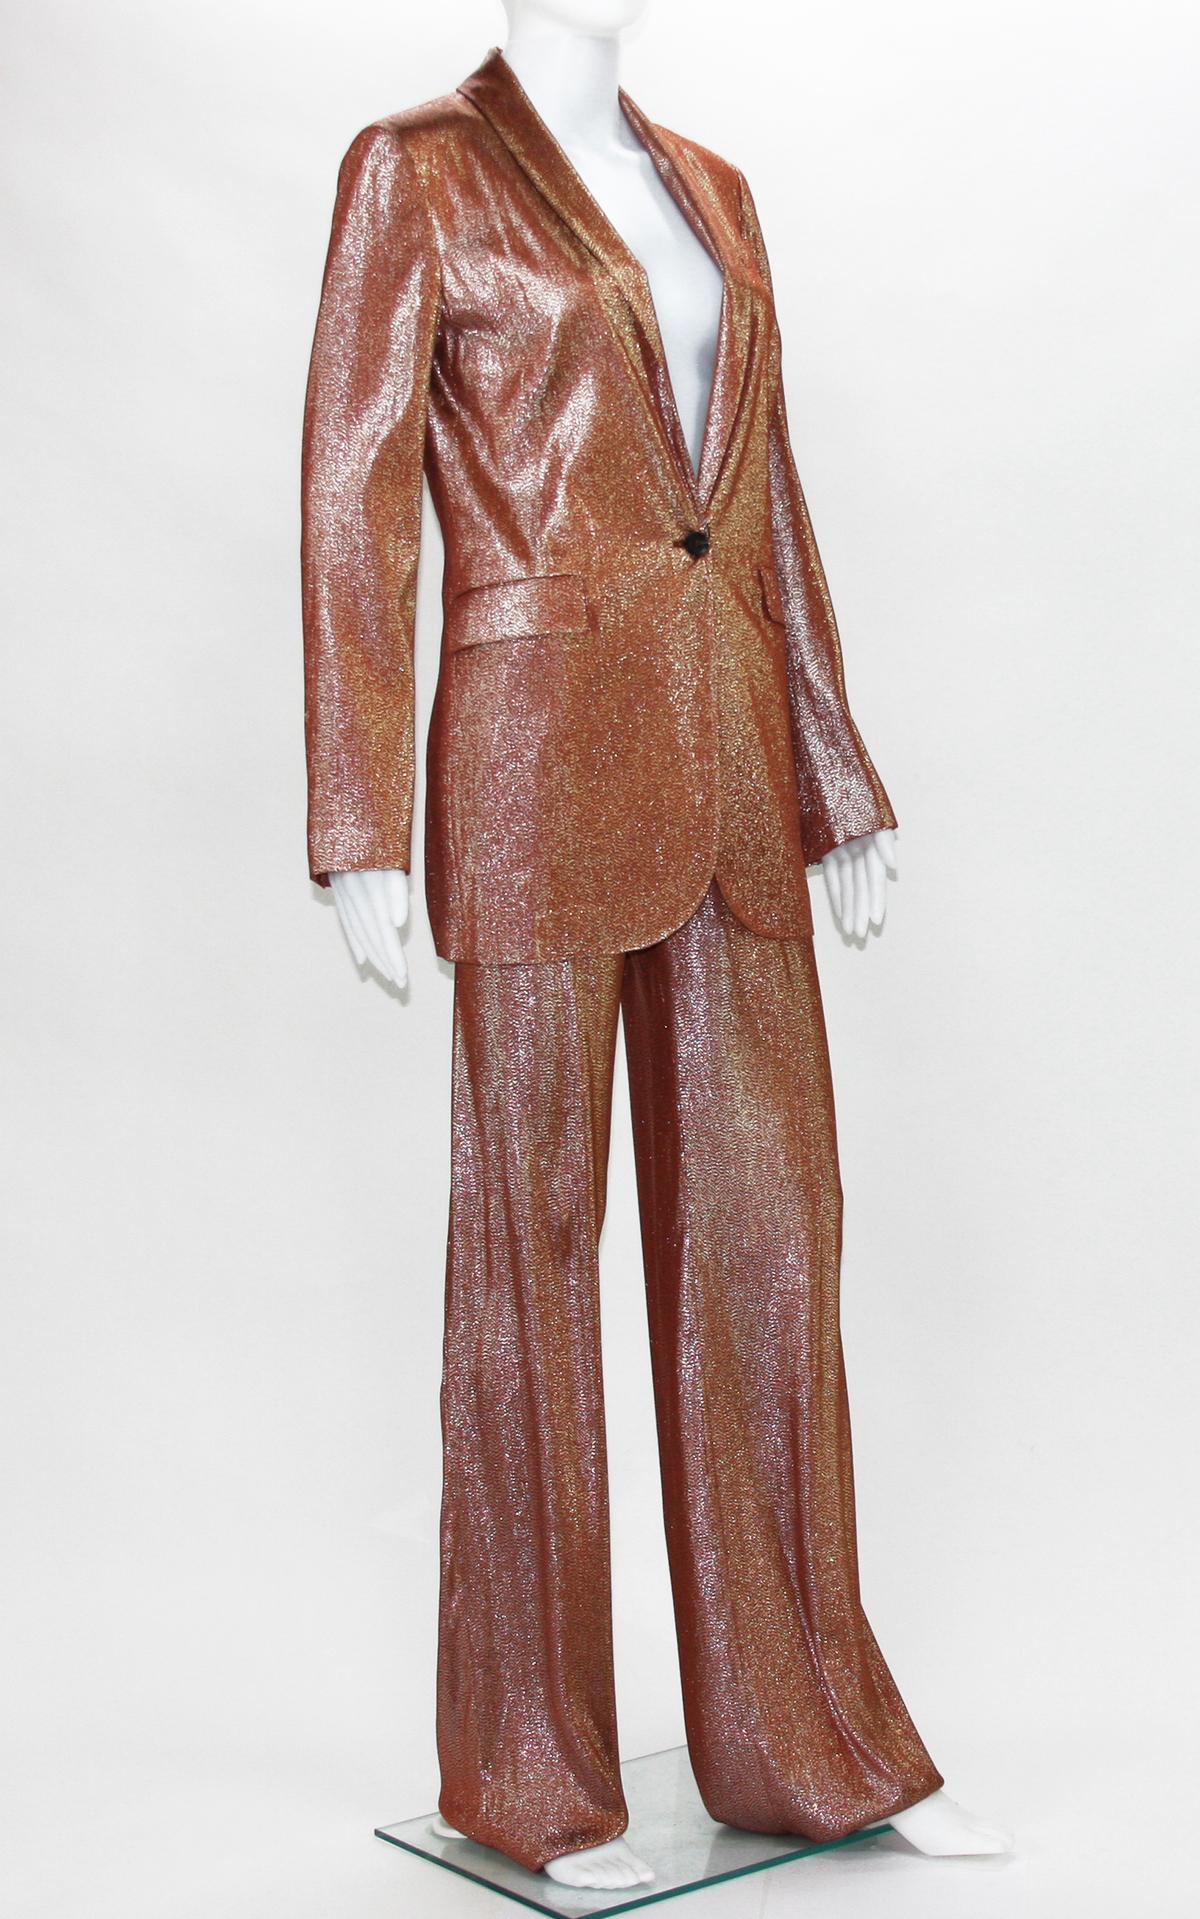 Women's New $3950 Runway GUCCI Suit Iridescent Rust Liquid Lame Jacket & Pants size 40